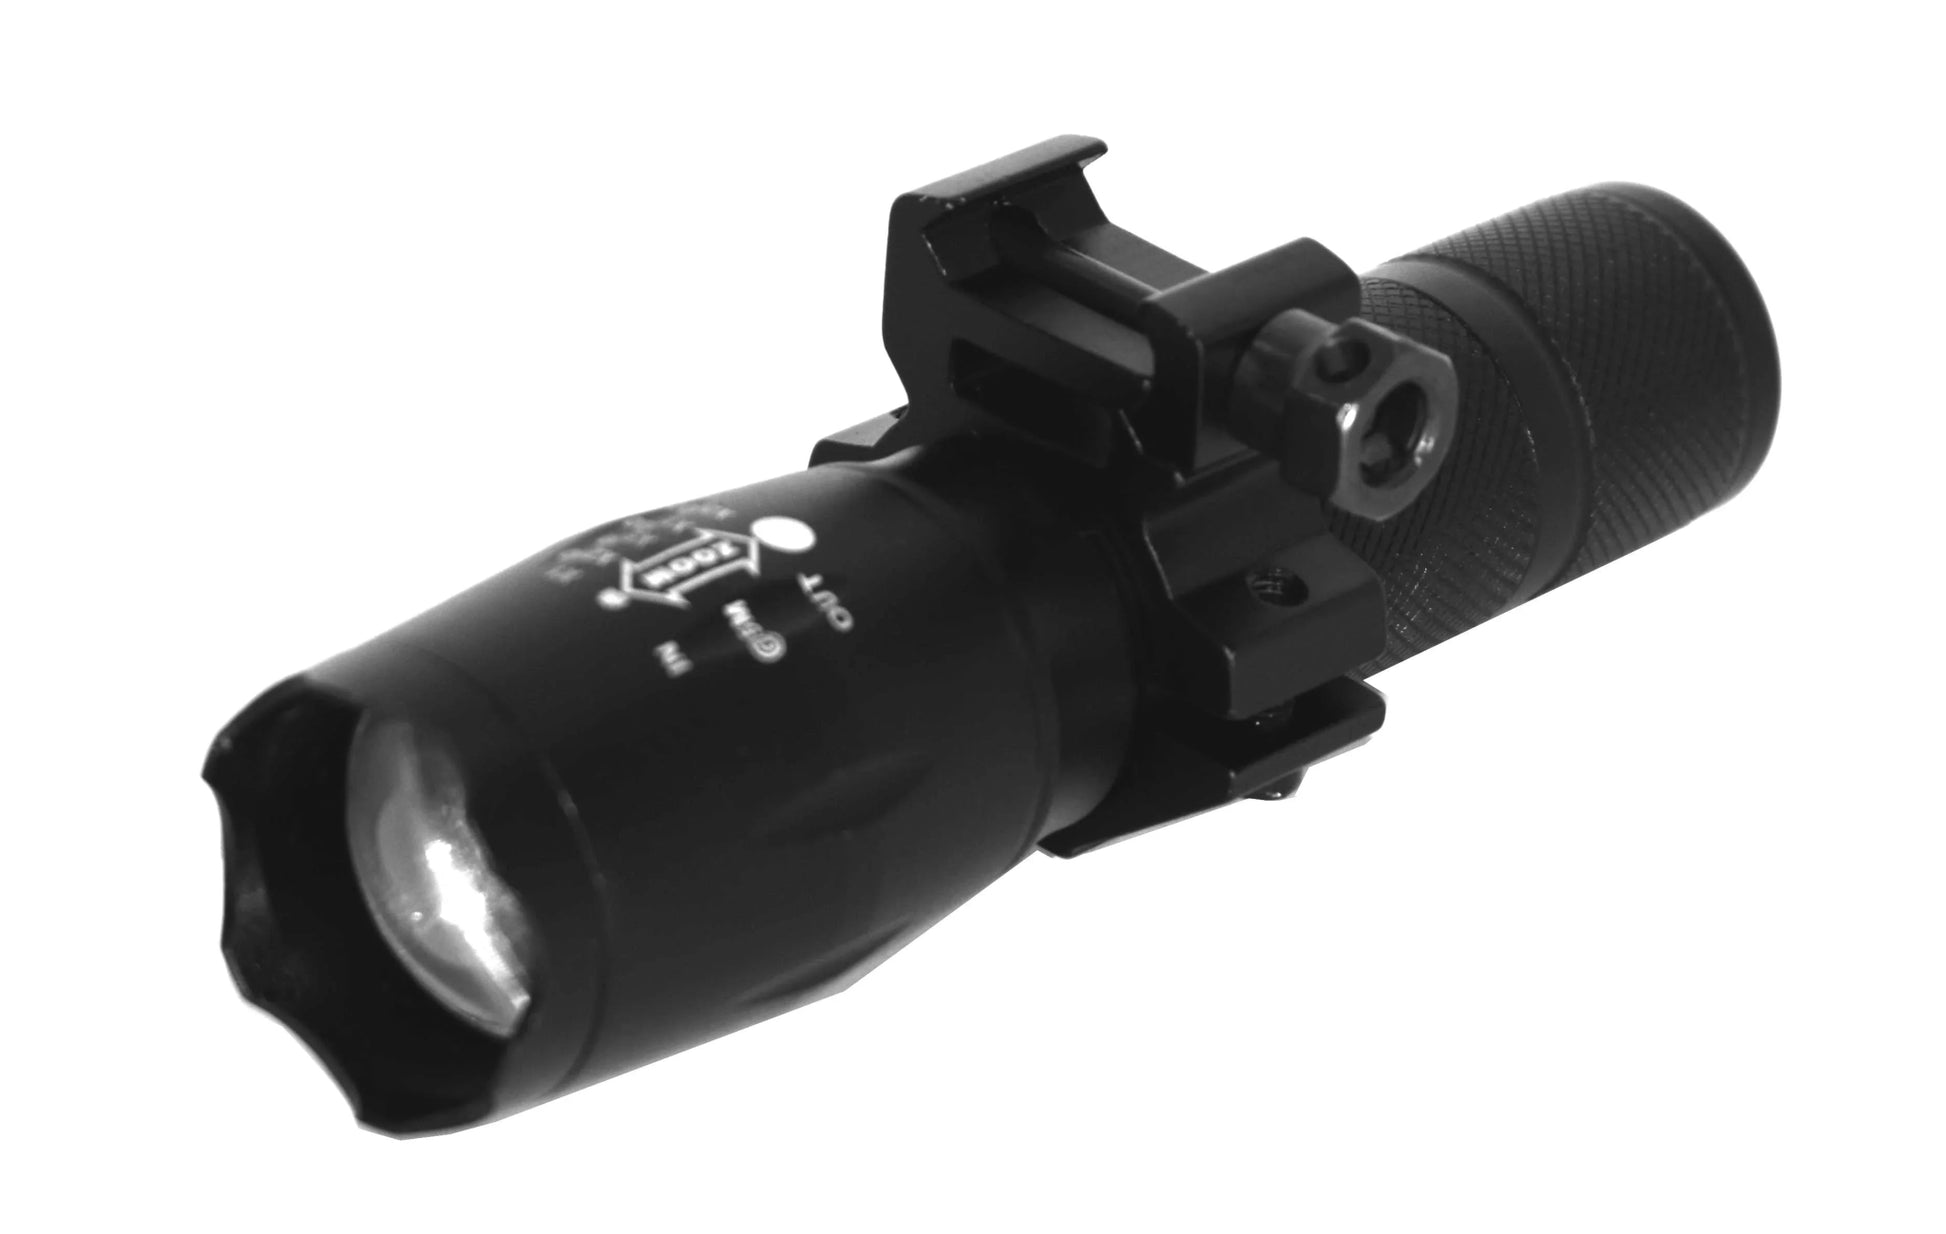 Akkar Churchill 612 pump 12 gauge pump flashlight 1000 Lumen hunting tactical. - TRINITY SUPPLY INC